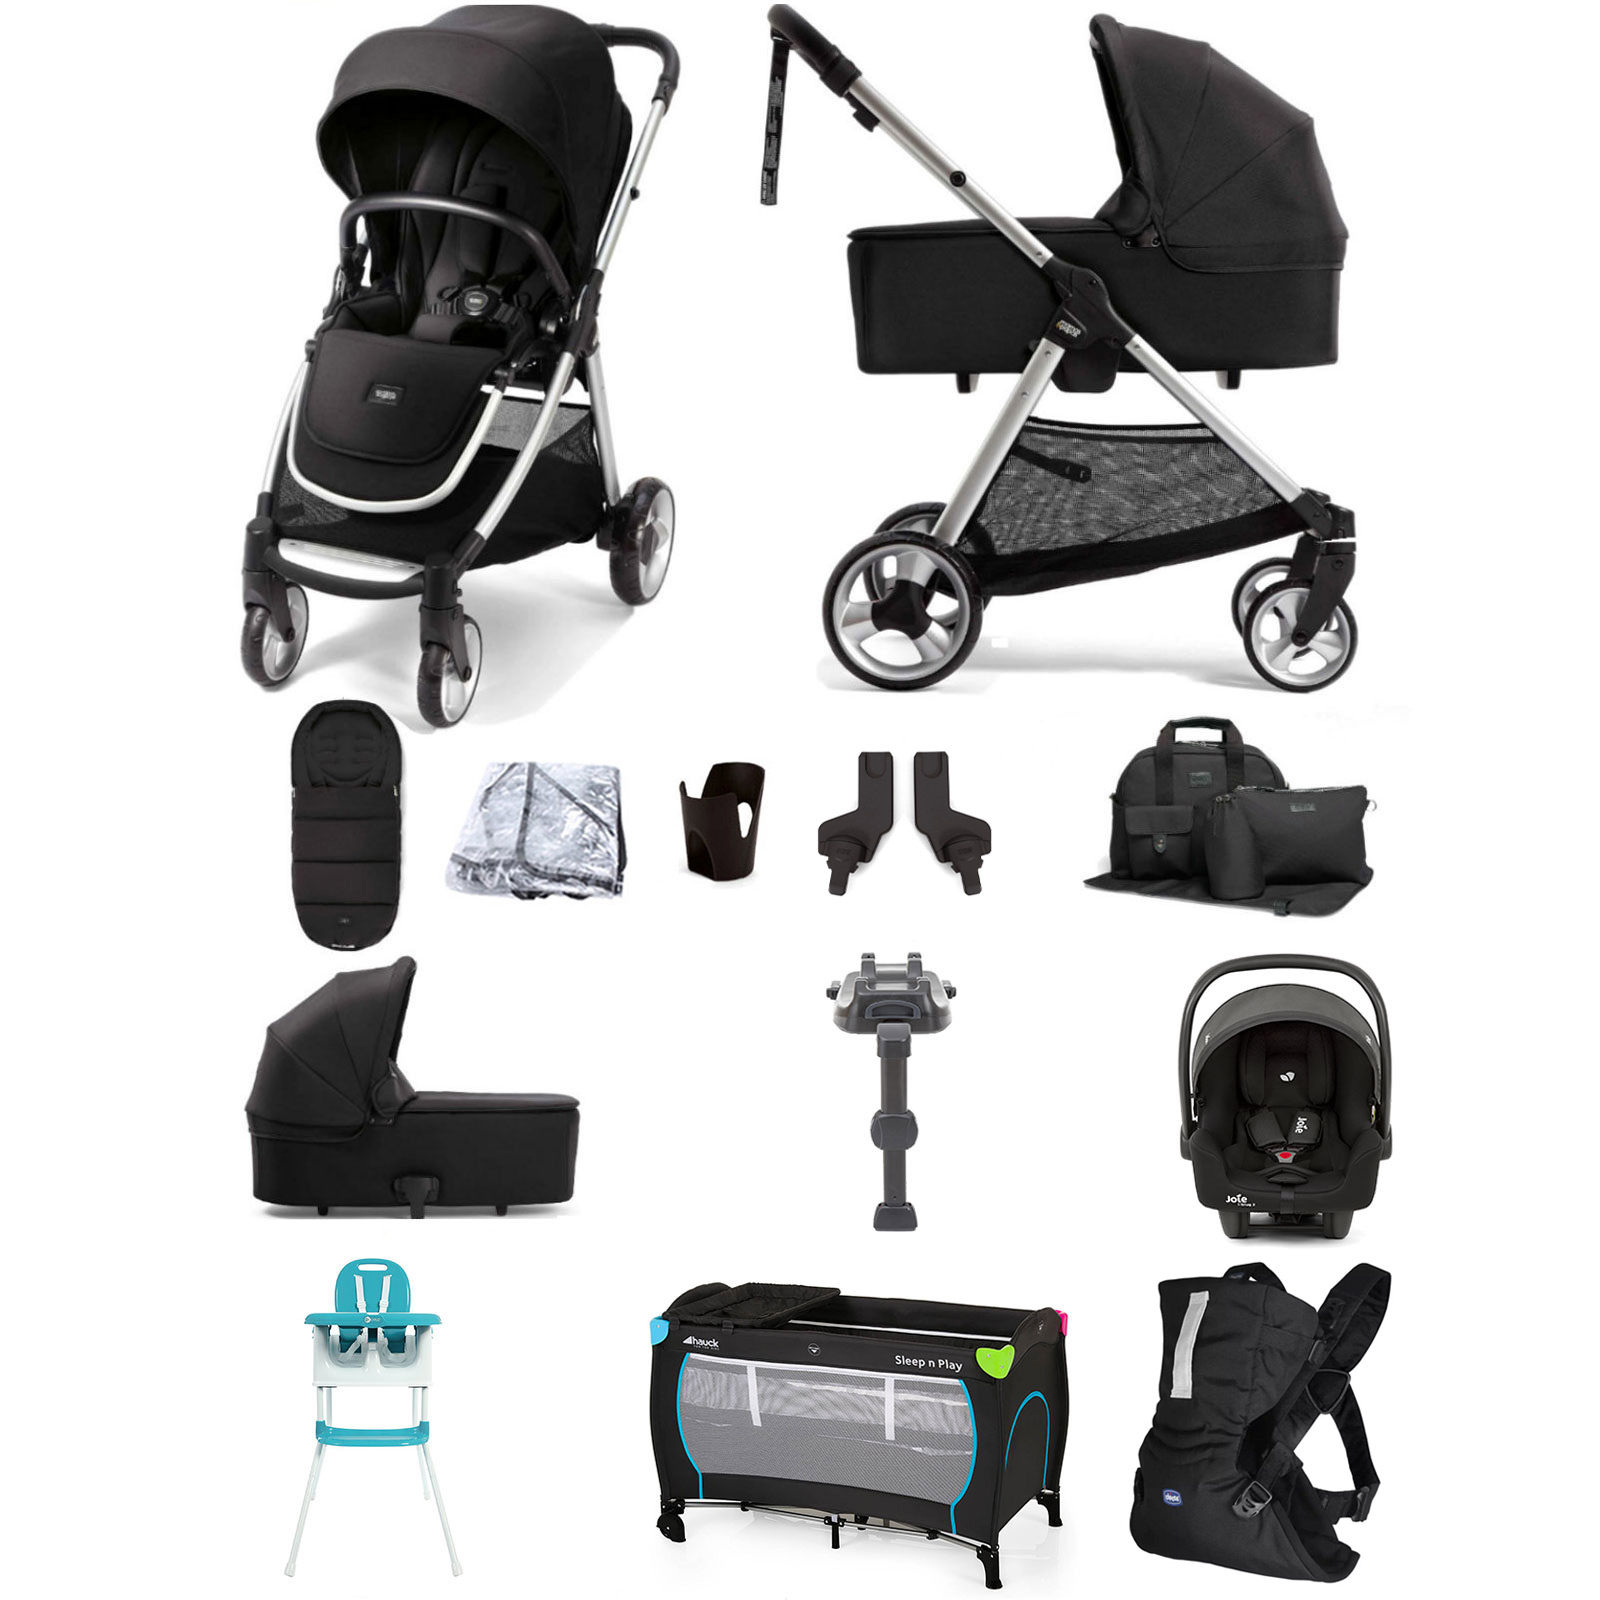 Mamas & Papas Flip XT2 12pc Essentials (i-Snug 2 Car Seat) Everything You Need Travel System Bundle with Carrycot & ISOFIX Base - Black